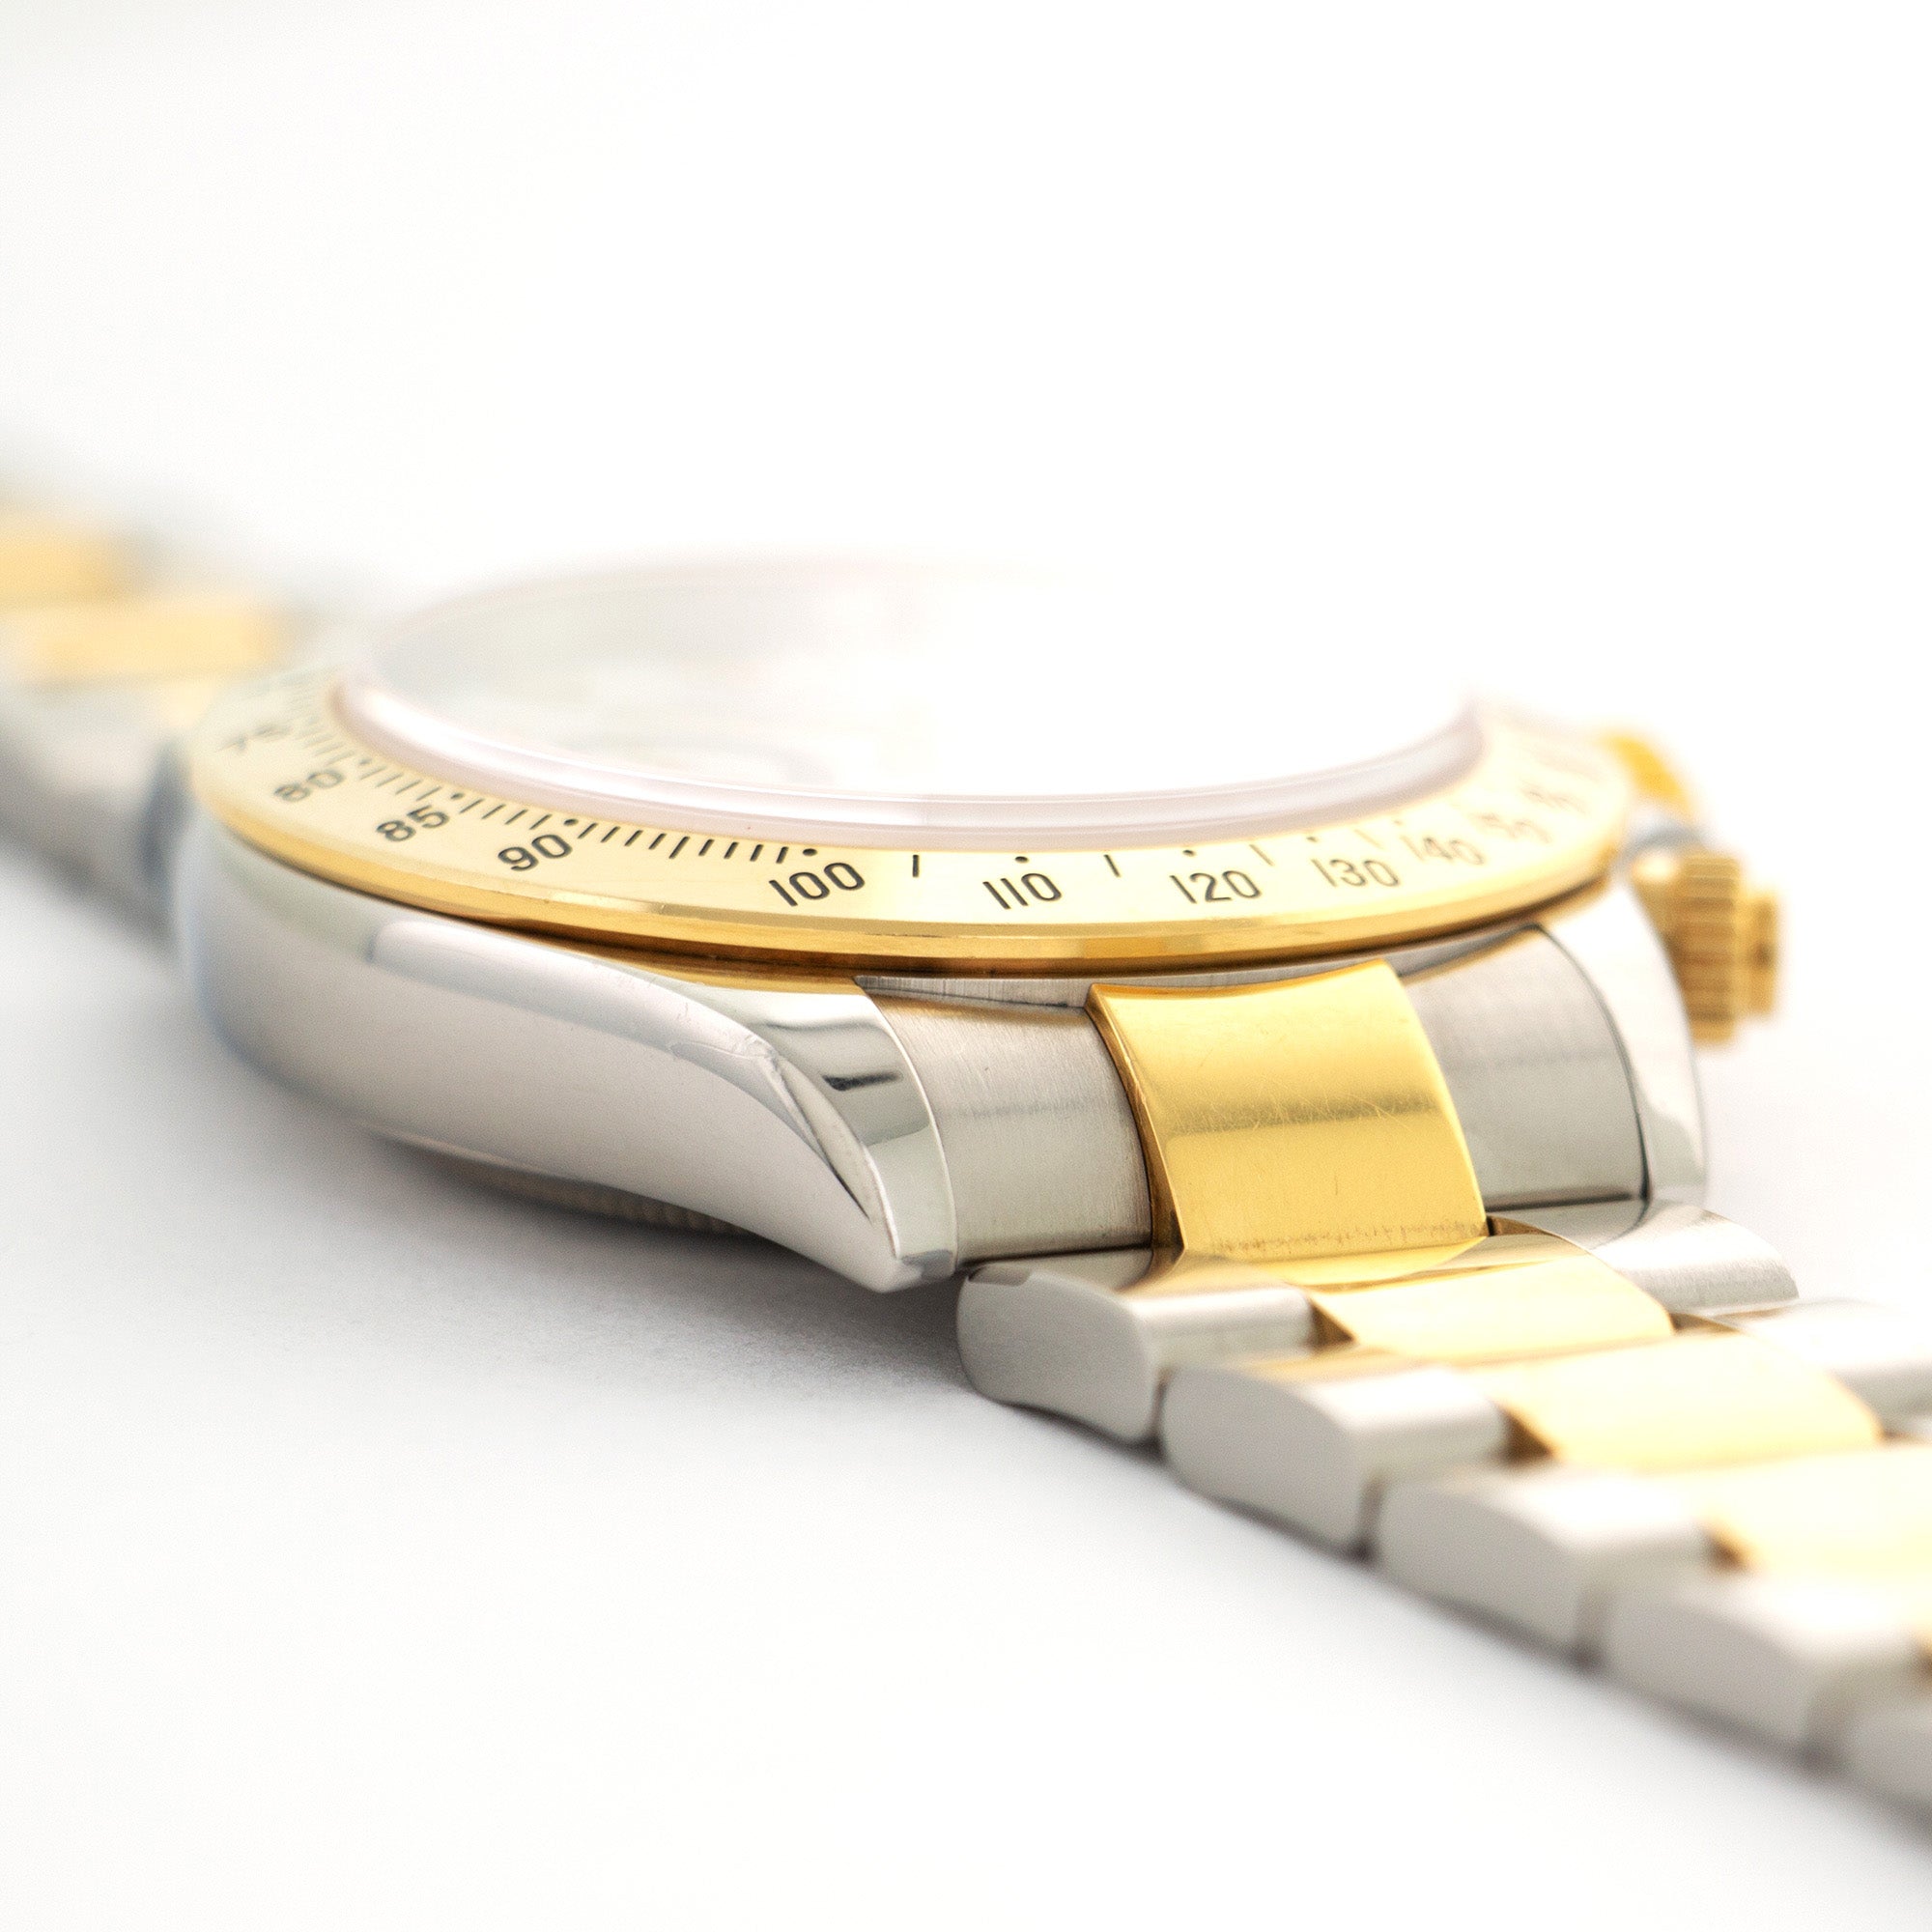 Rolex - Rolex Two Tone Cosmograph Daytona Watch Ref. 116523 - The Keystone Watches